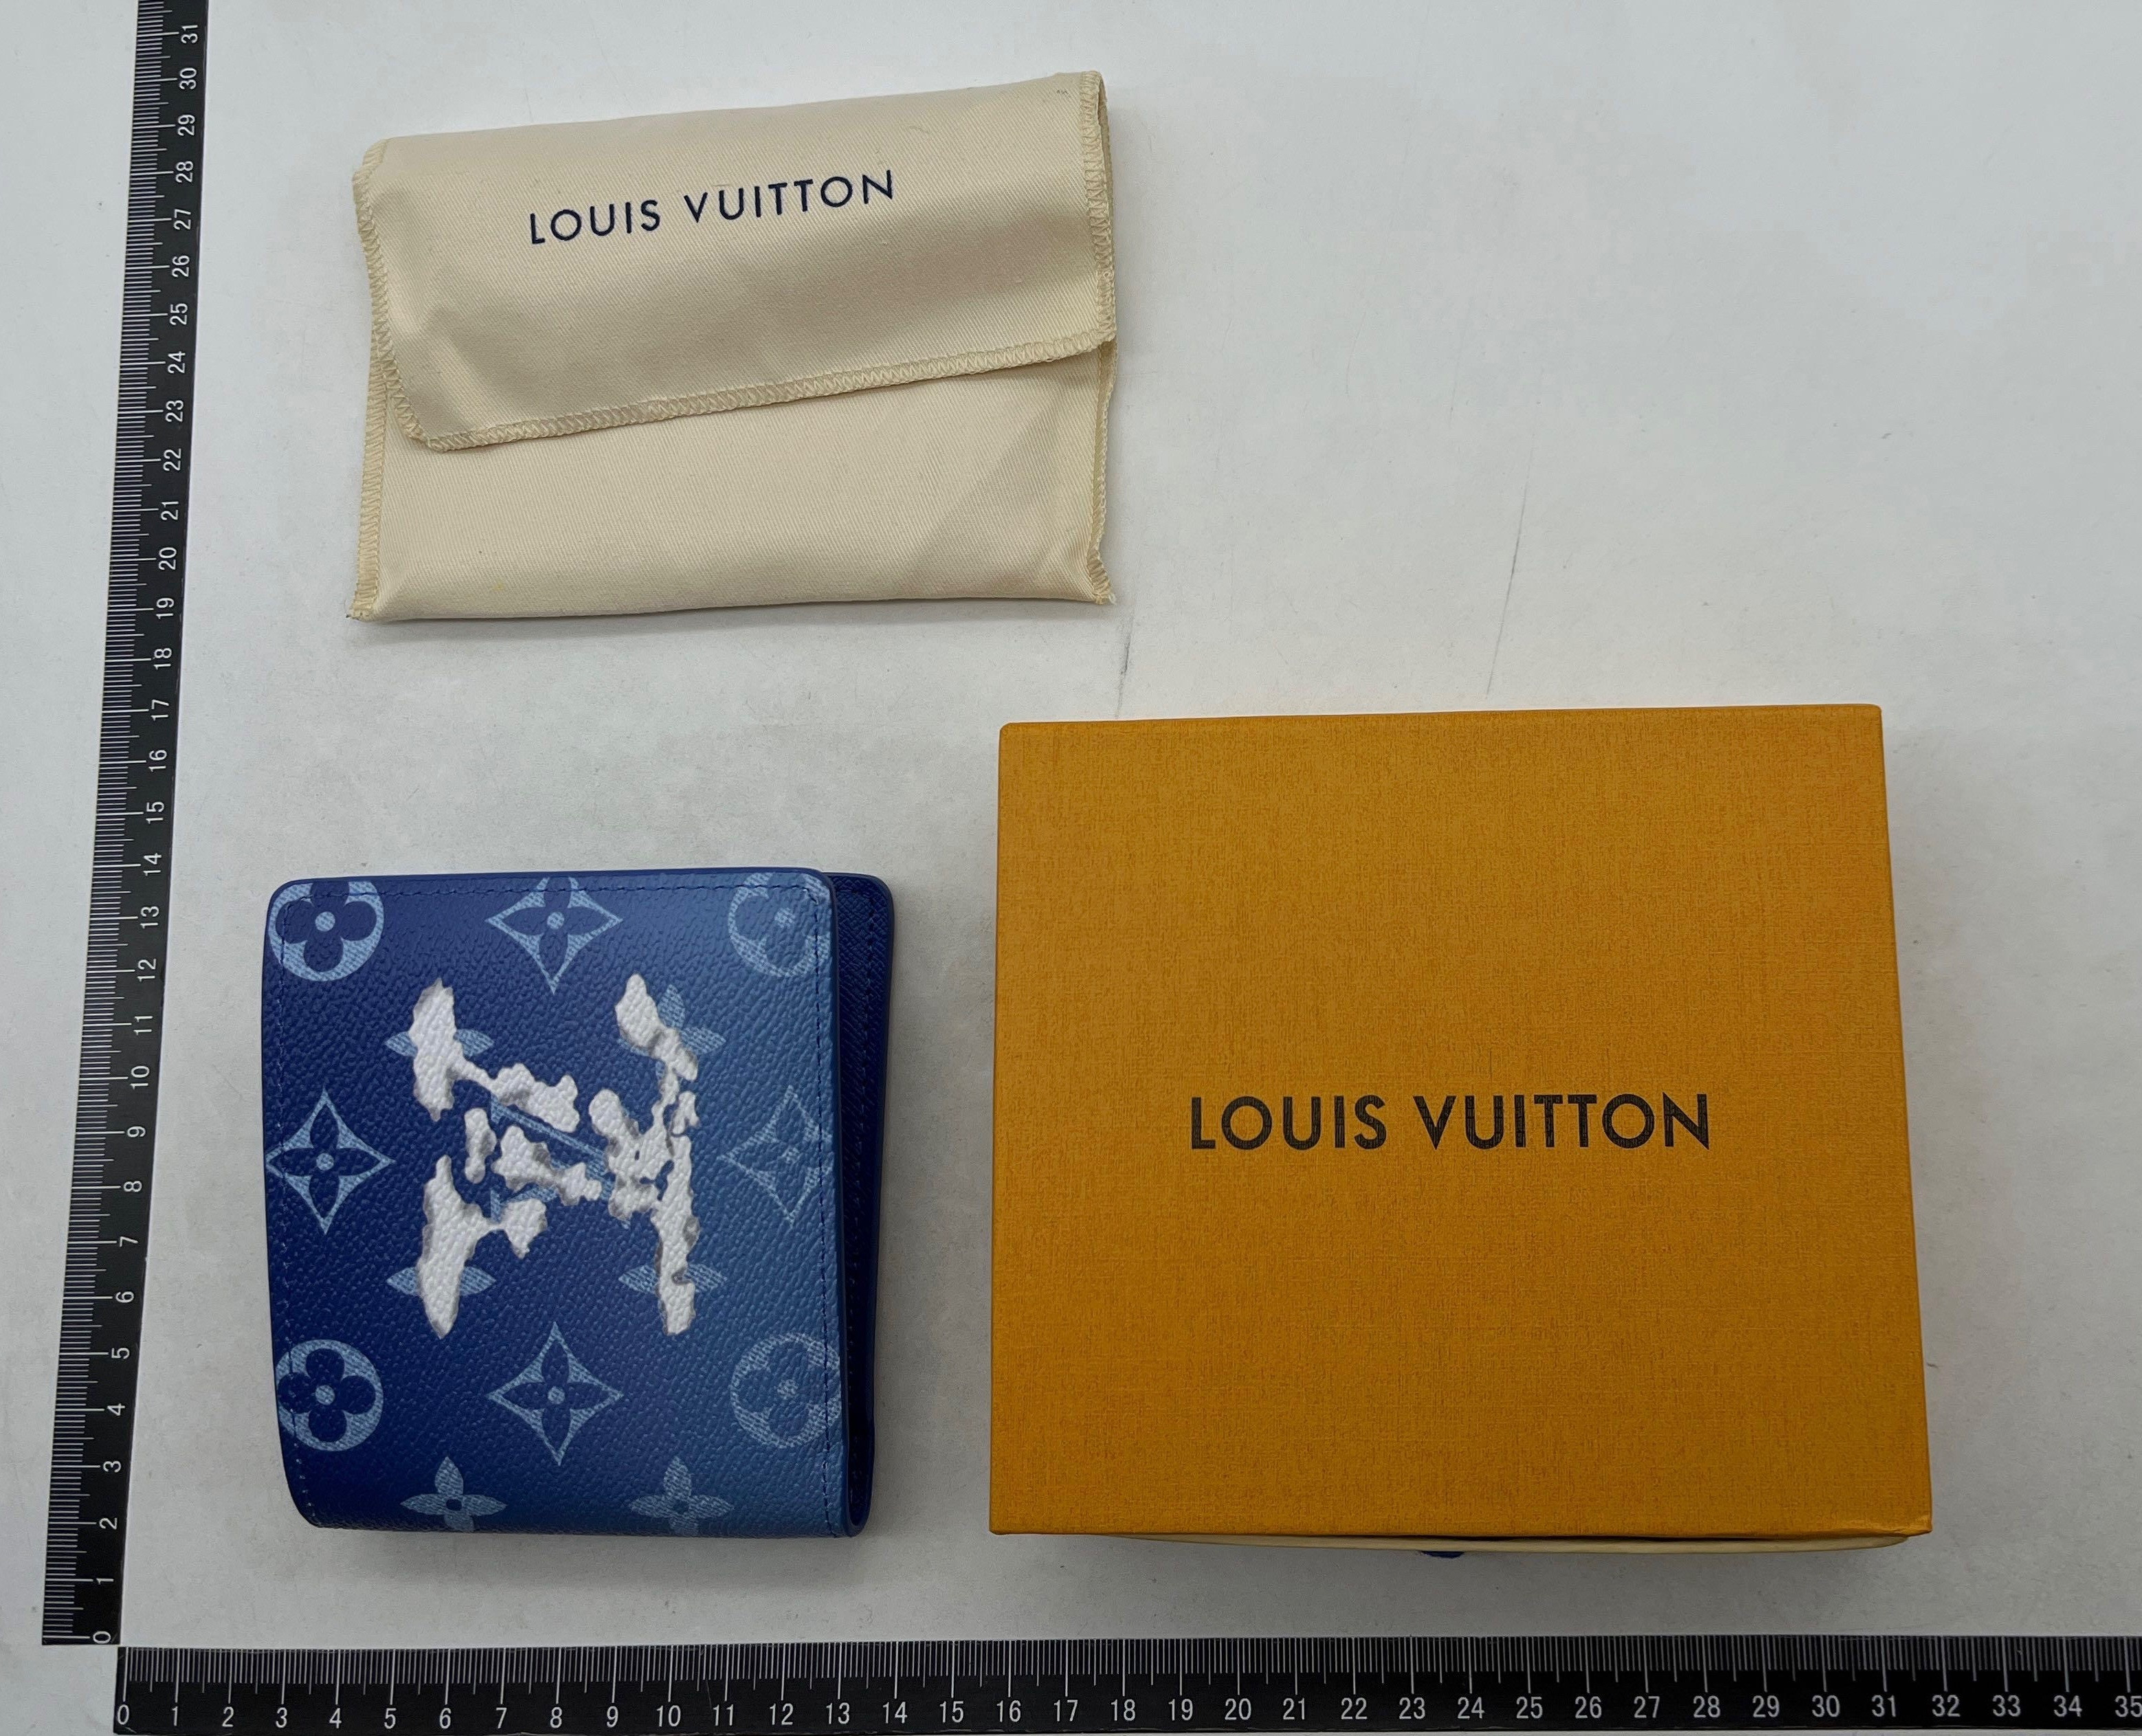 Louis Vuitton Purse - PandaFinds